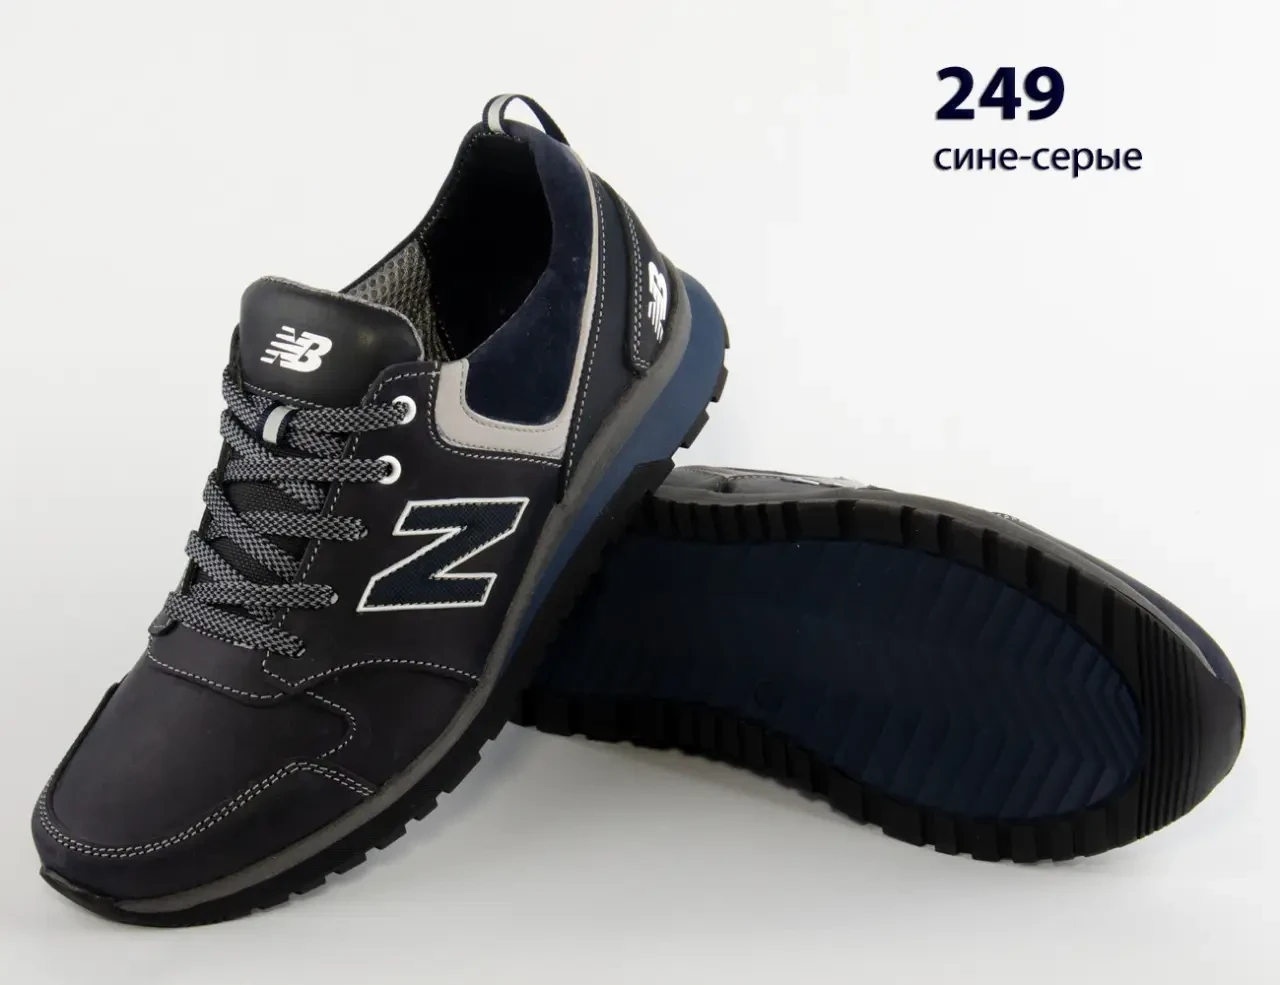 Кожаные кроссовки New Balance  (249 сине-серые) мужские спортивные кроссовки шкіряні чоловічі